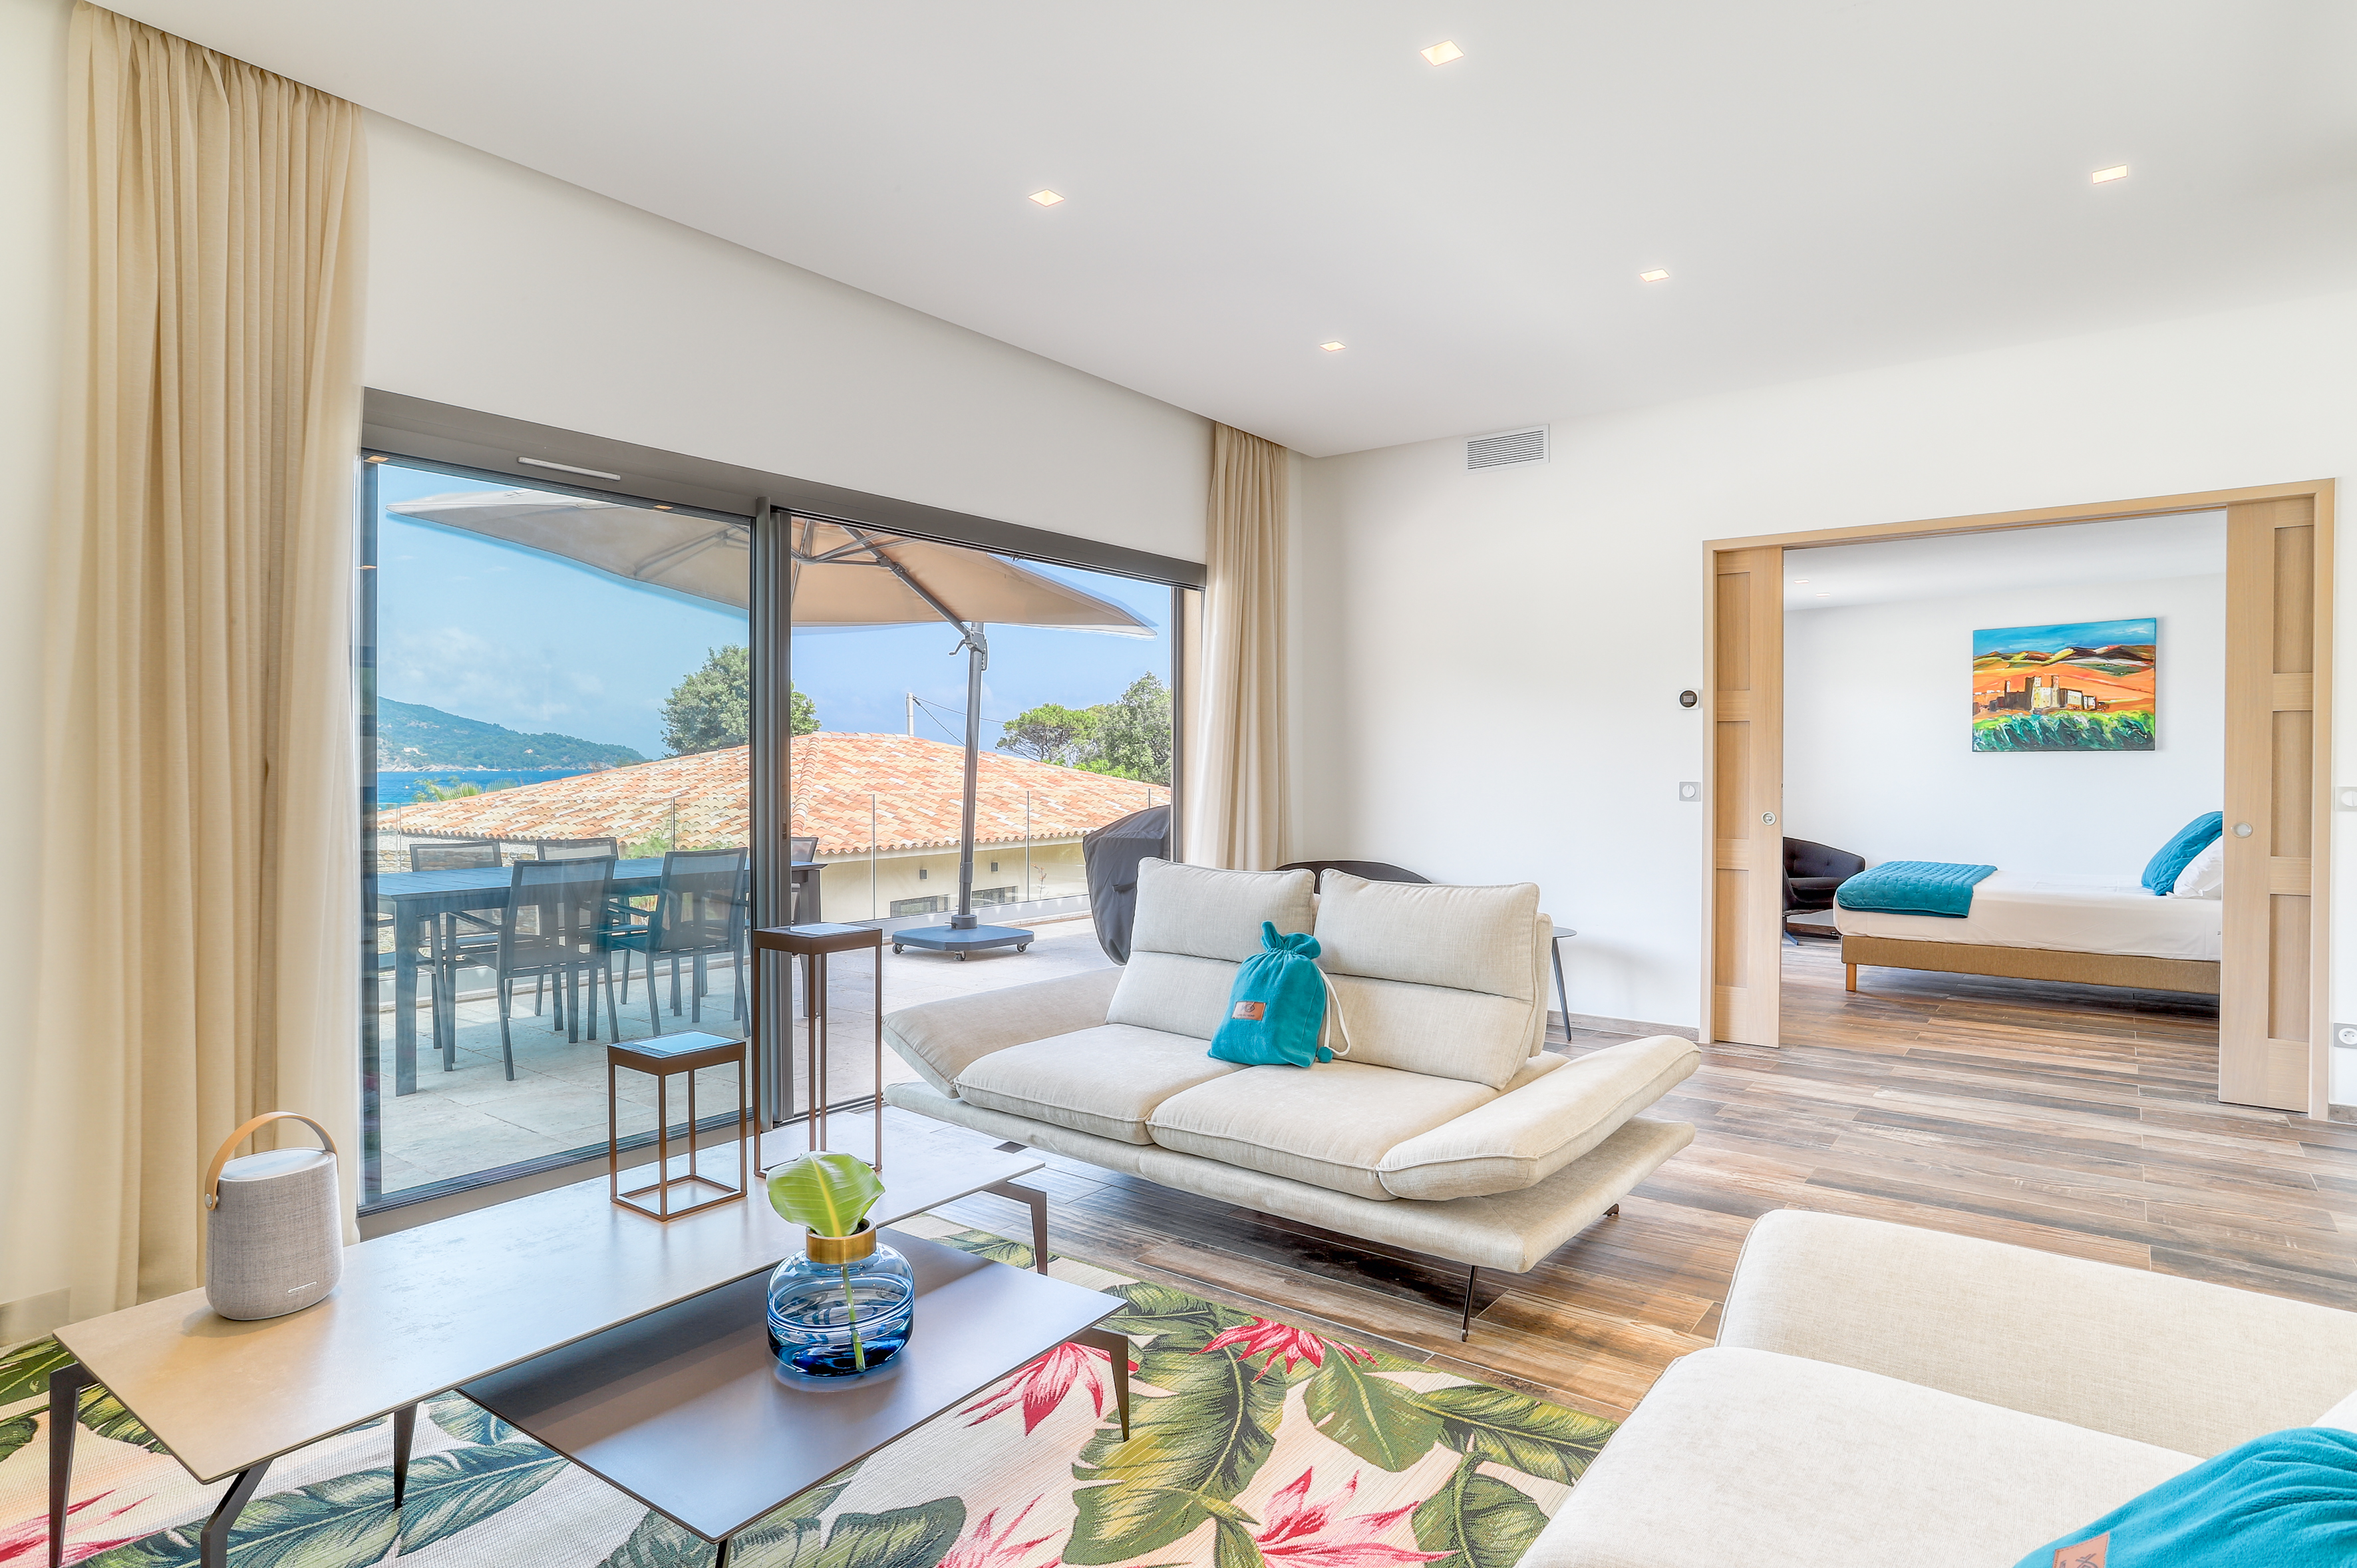 Akwabay - Les Villas du Cap - villa avec salon luxe, terrasse privative